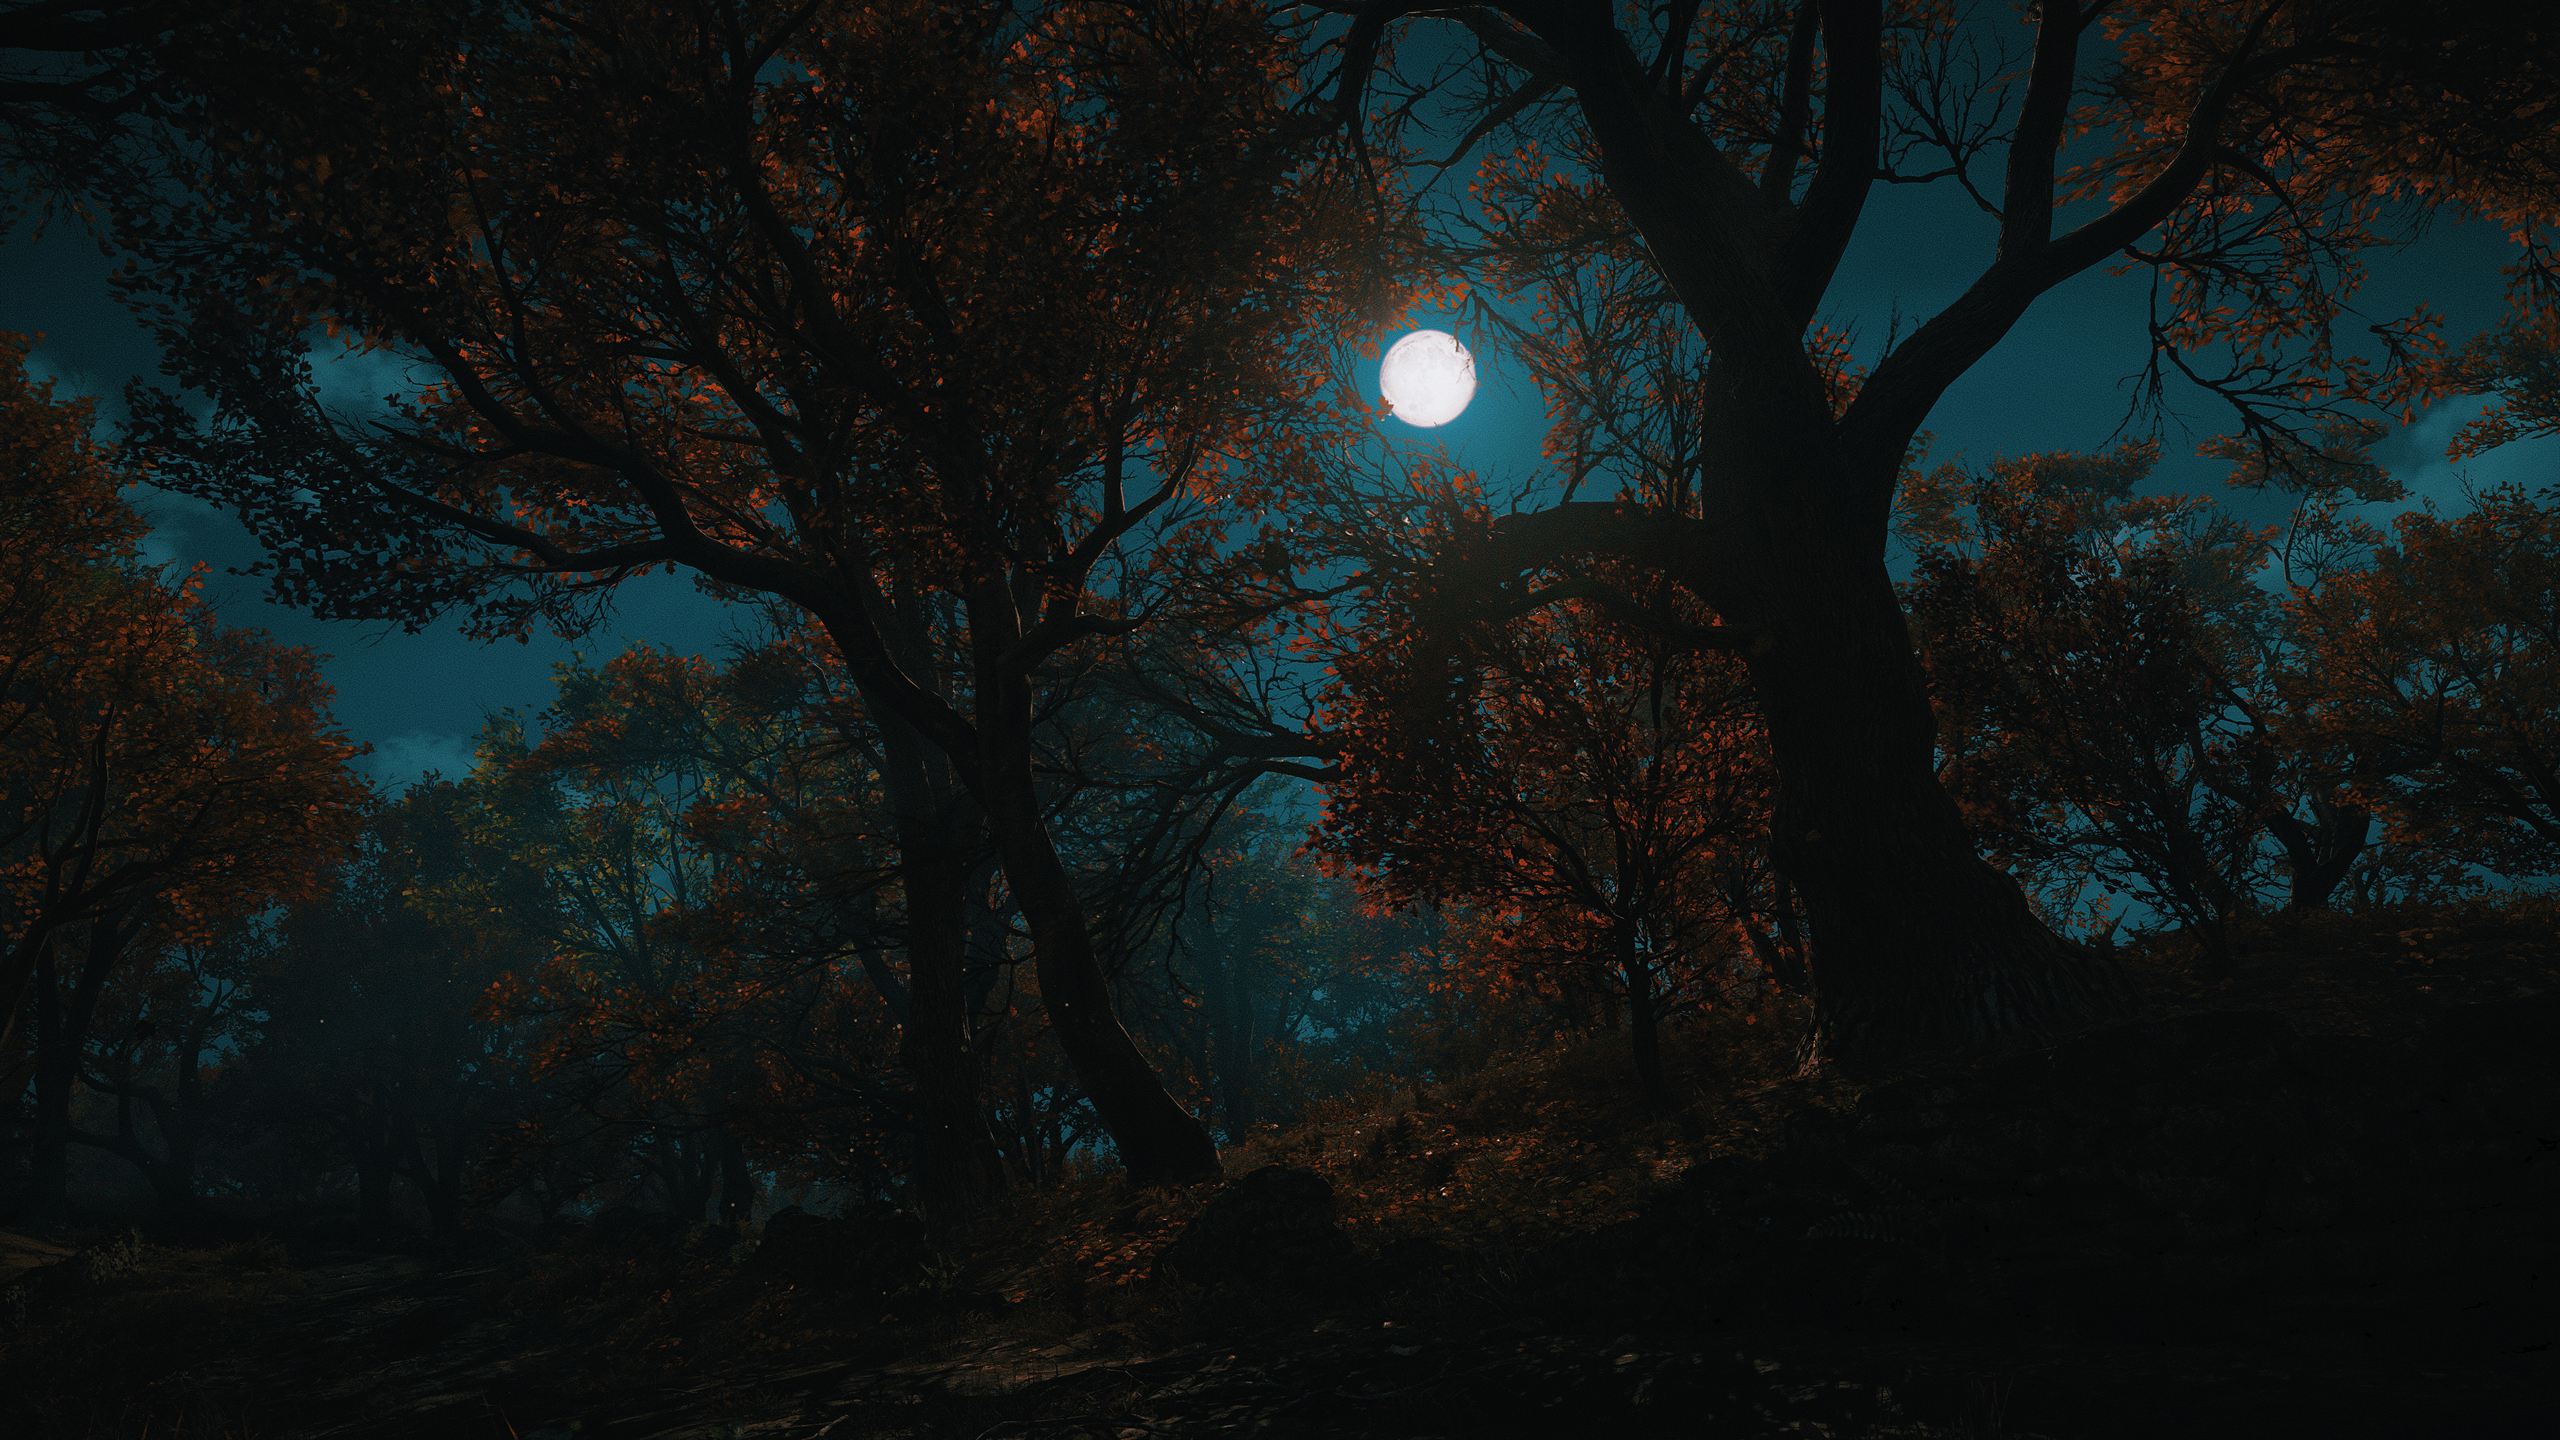 General 2560x1440 Assassin's Creed: Valhalla reshade forest full moon fall raven night digital art video games